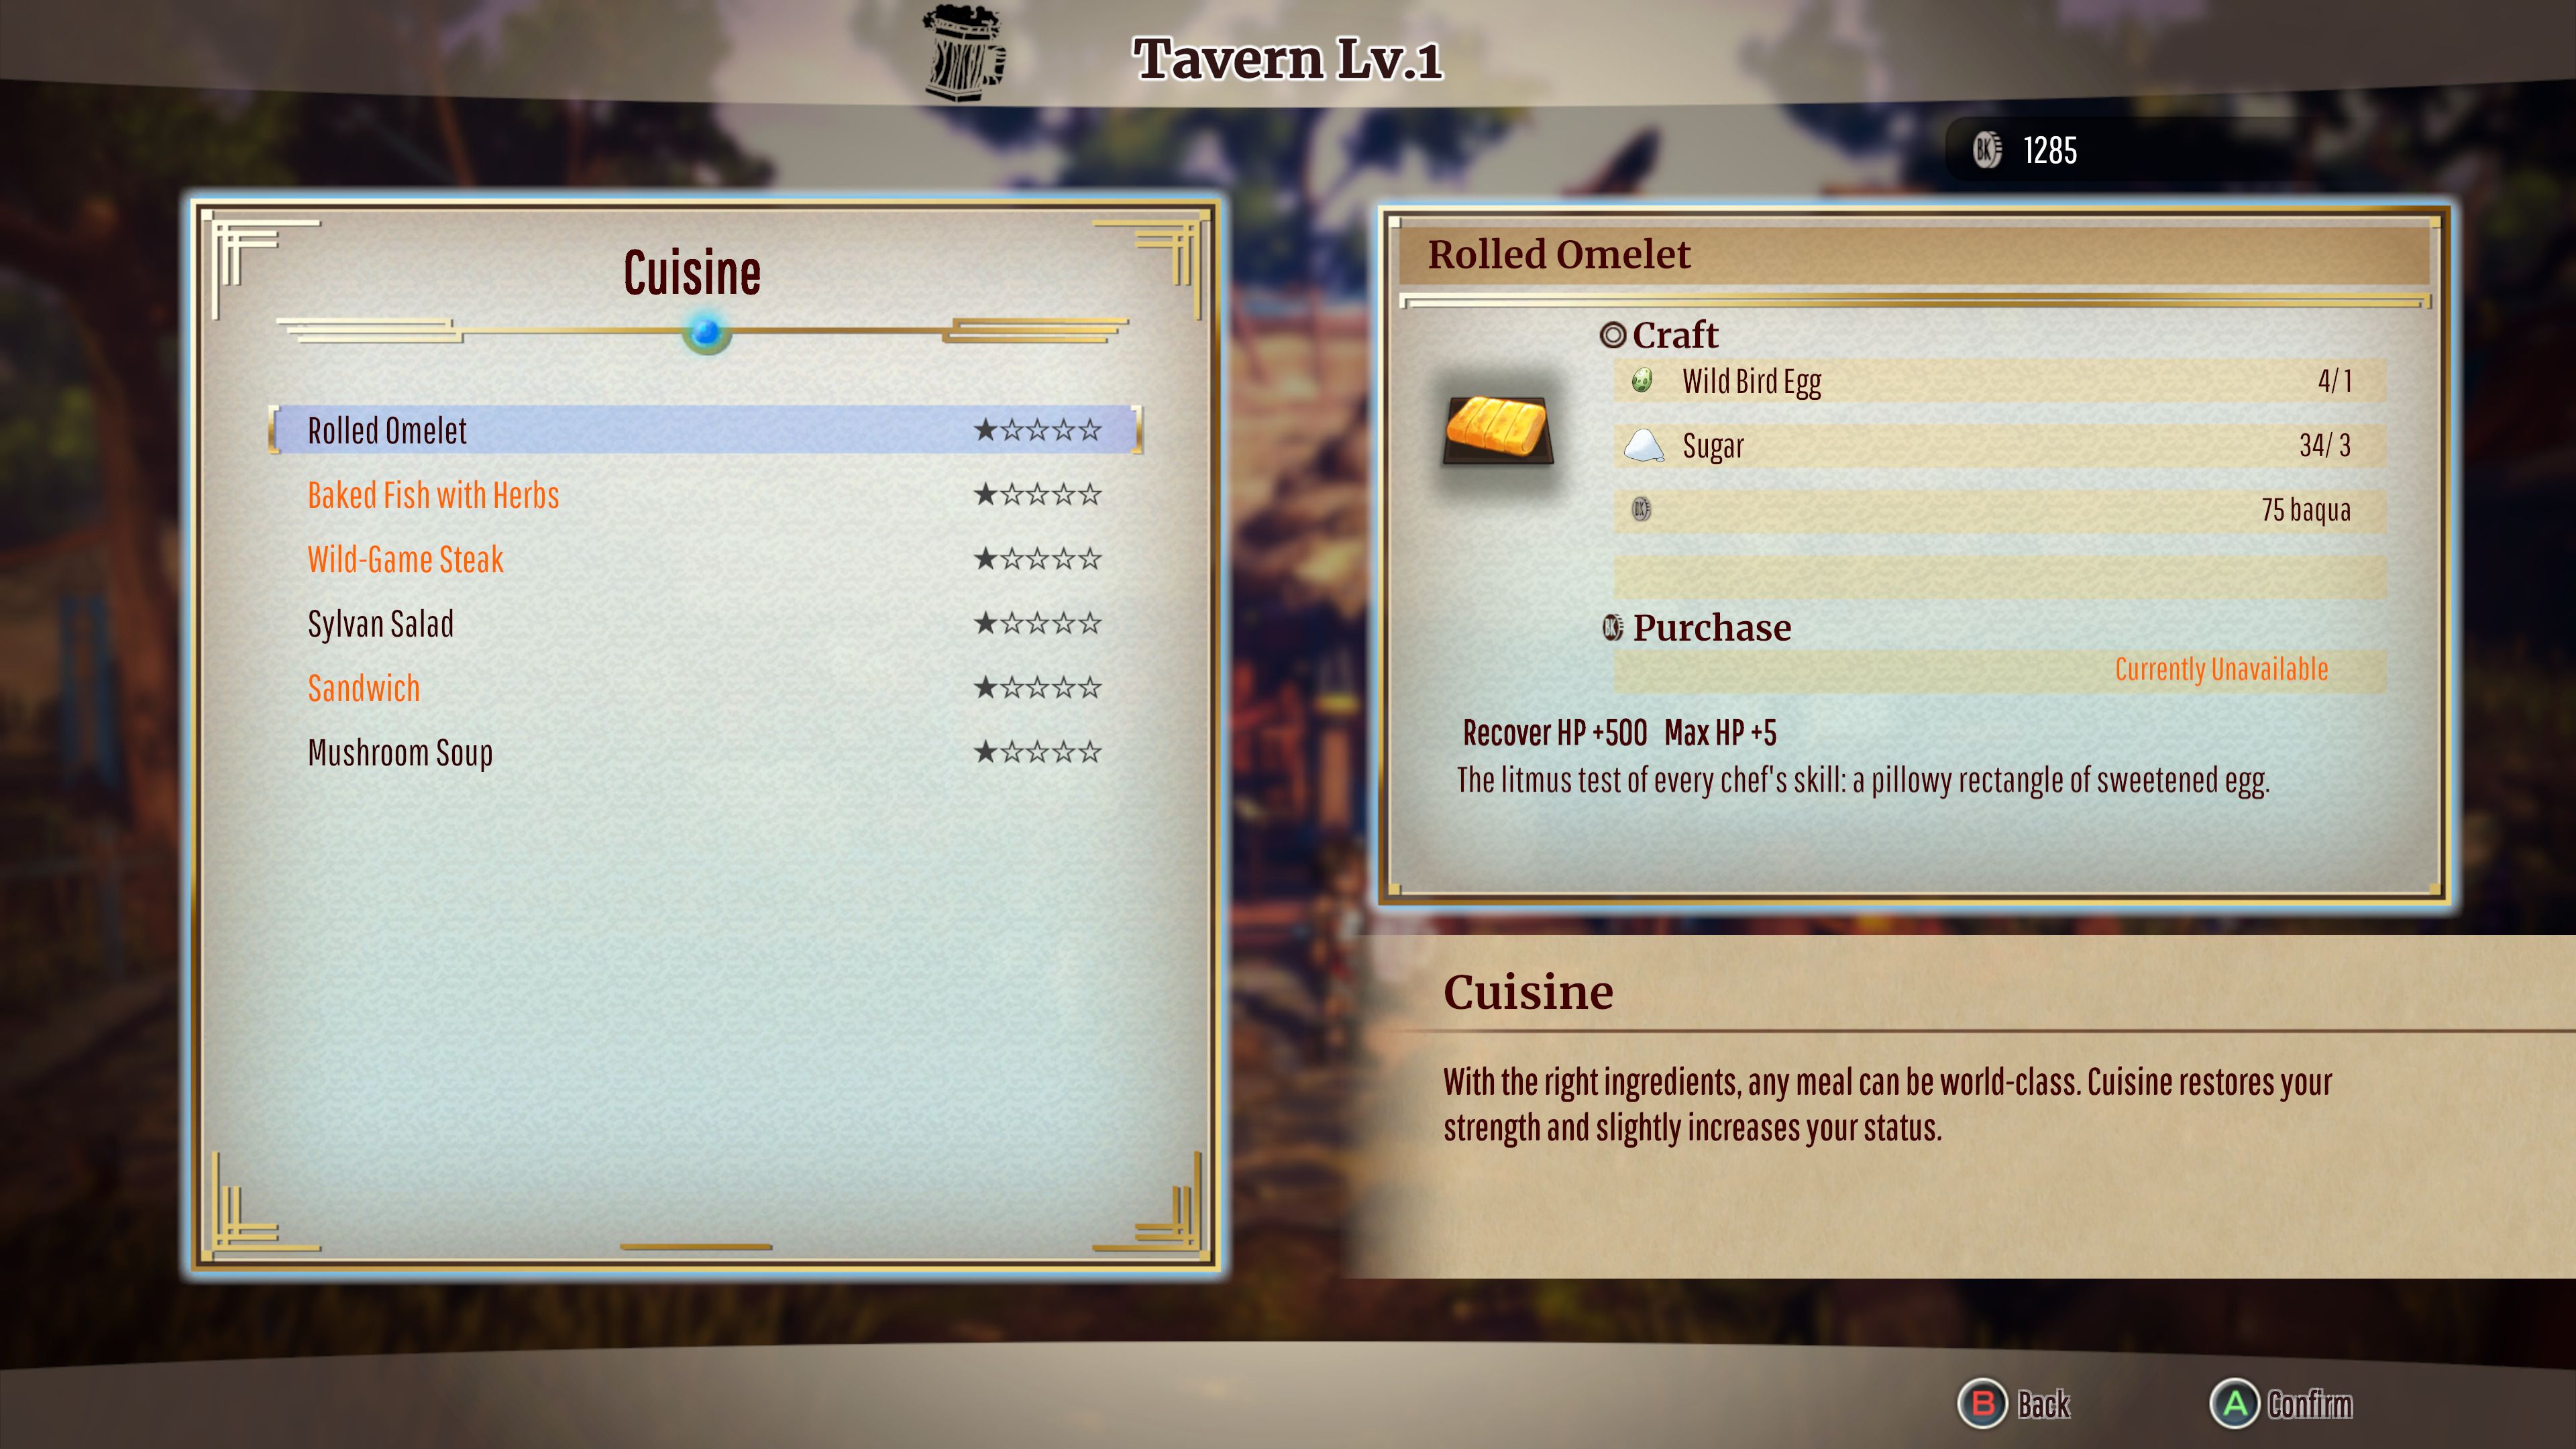 The Tavern menu.